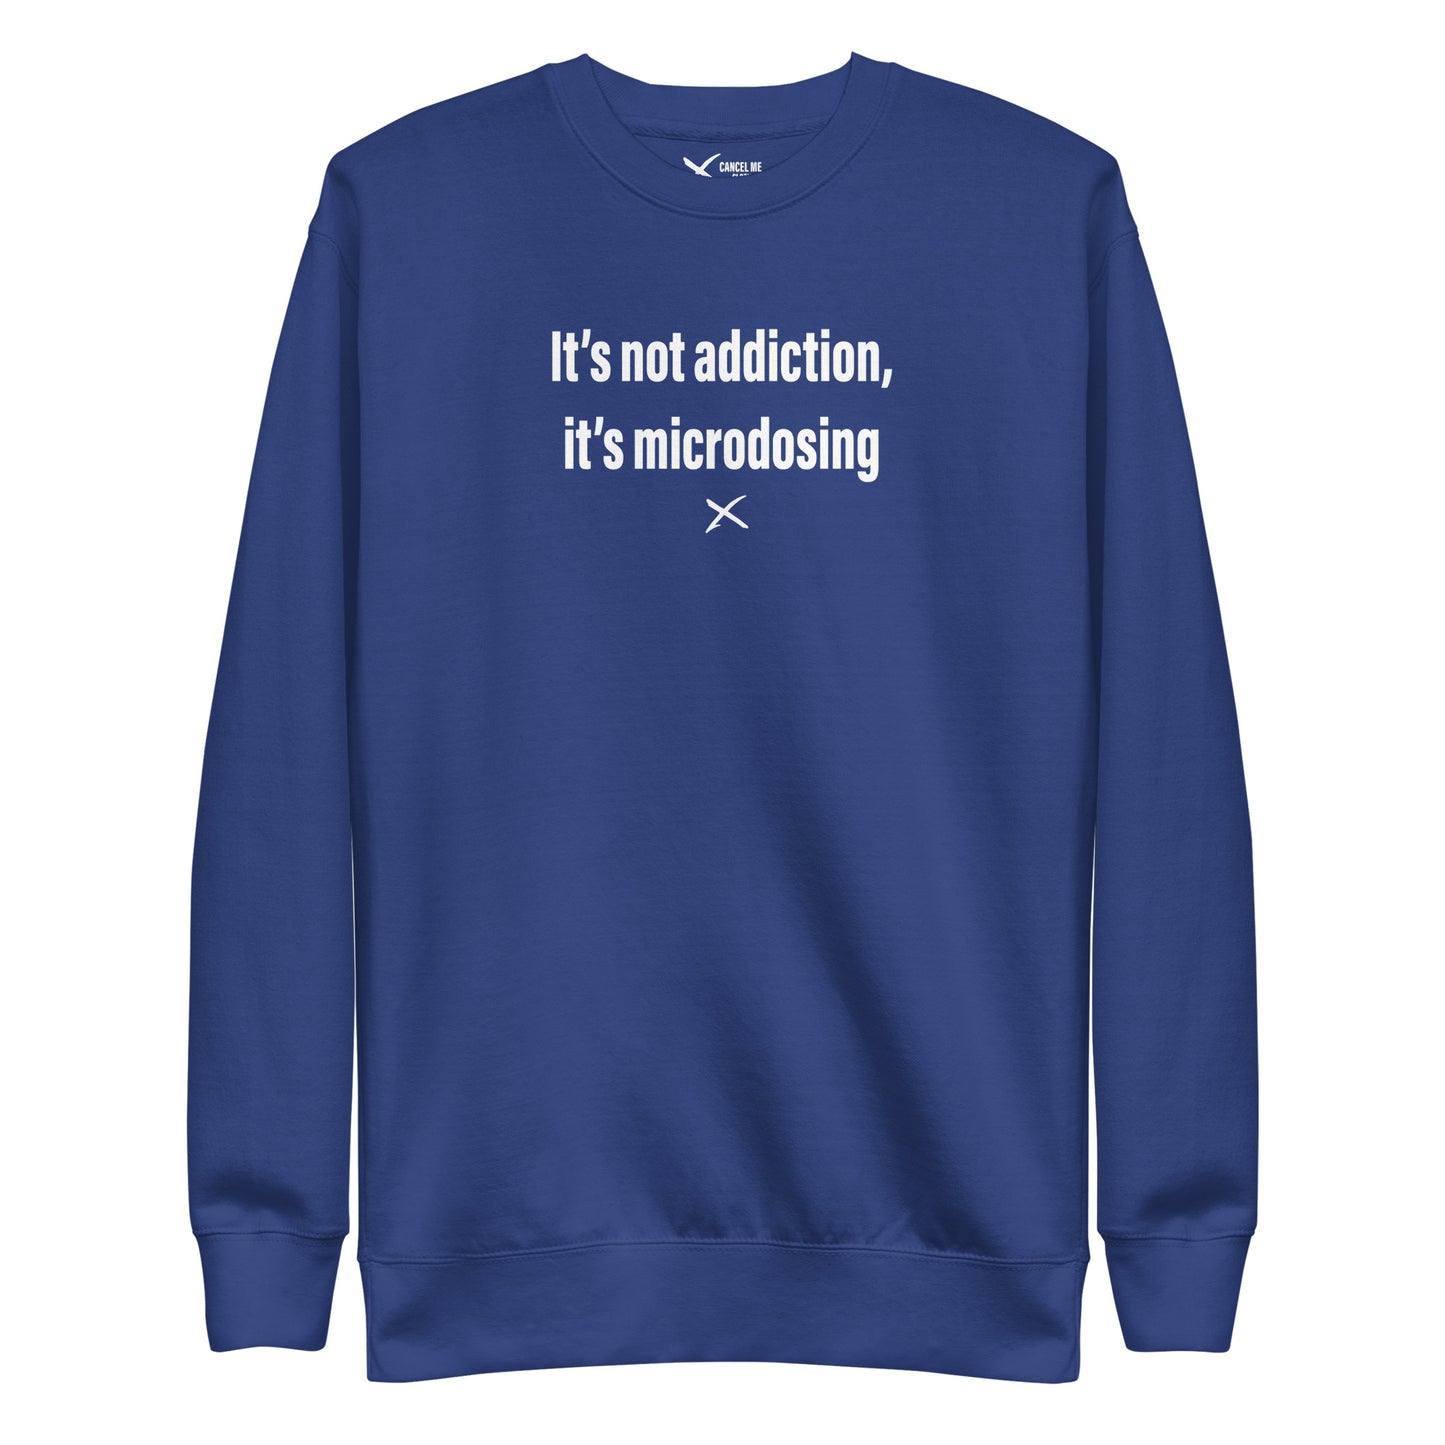 It's not addiction, it's microdosing - Sweatshirt